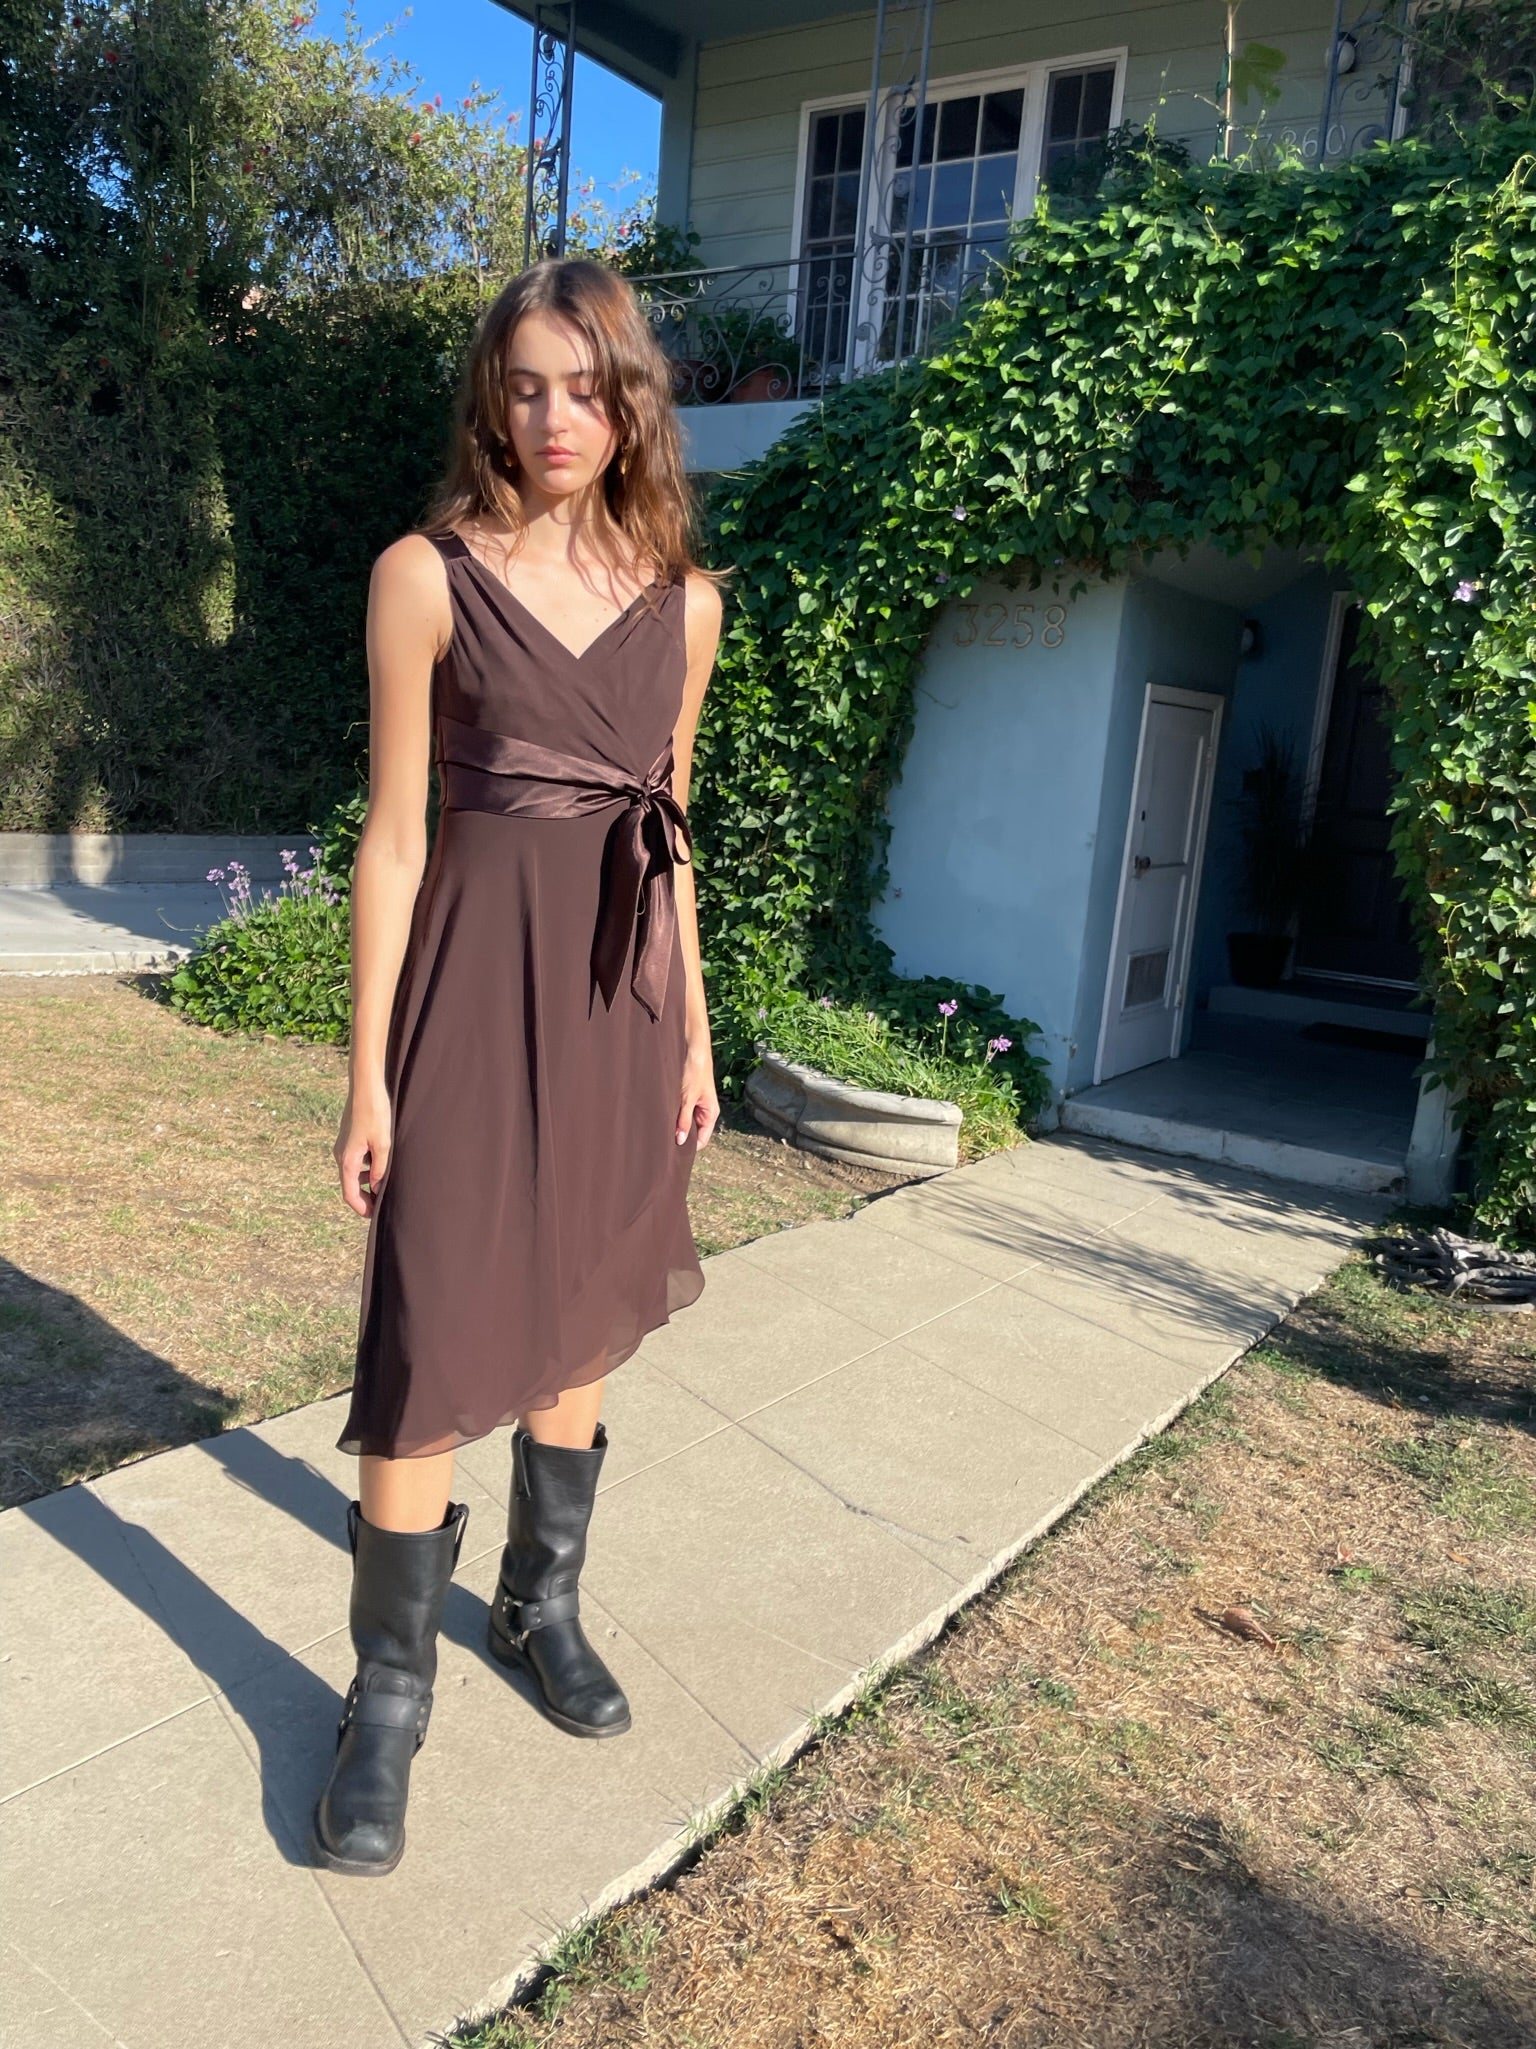 girl standing wearing a brown dress